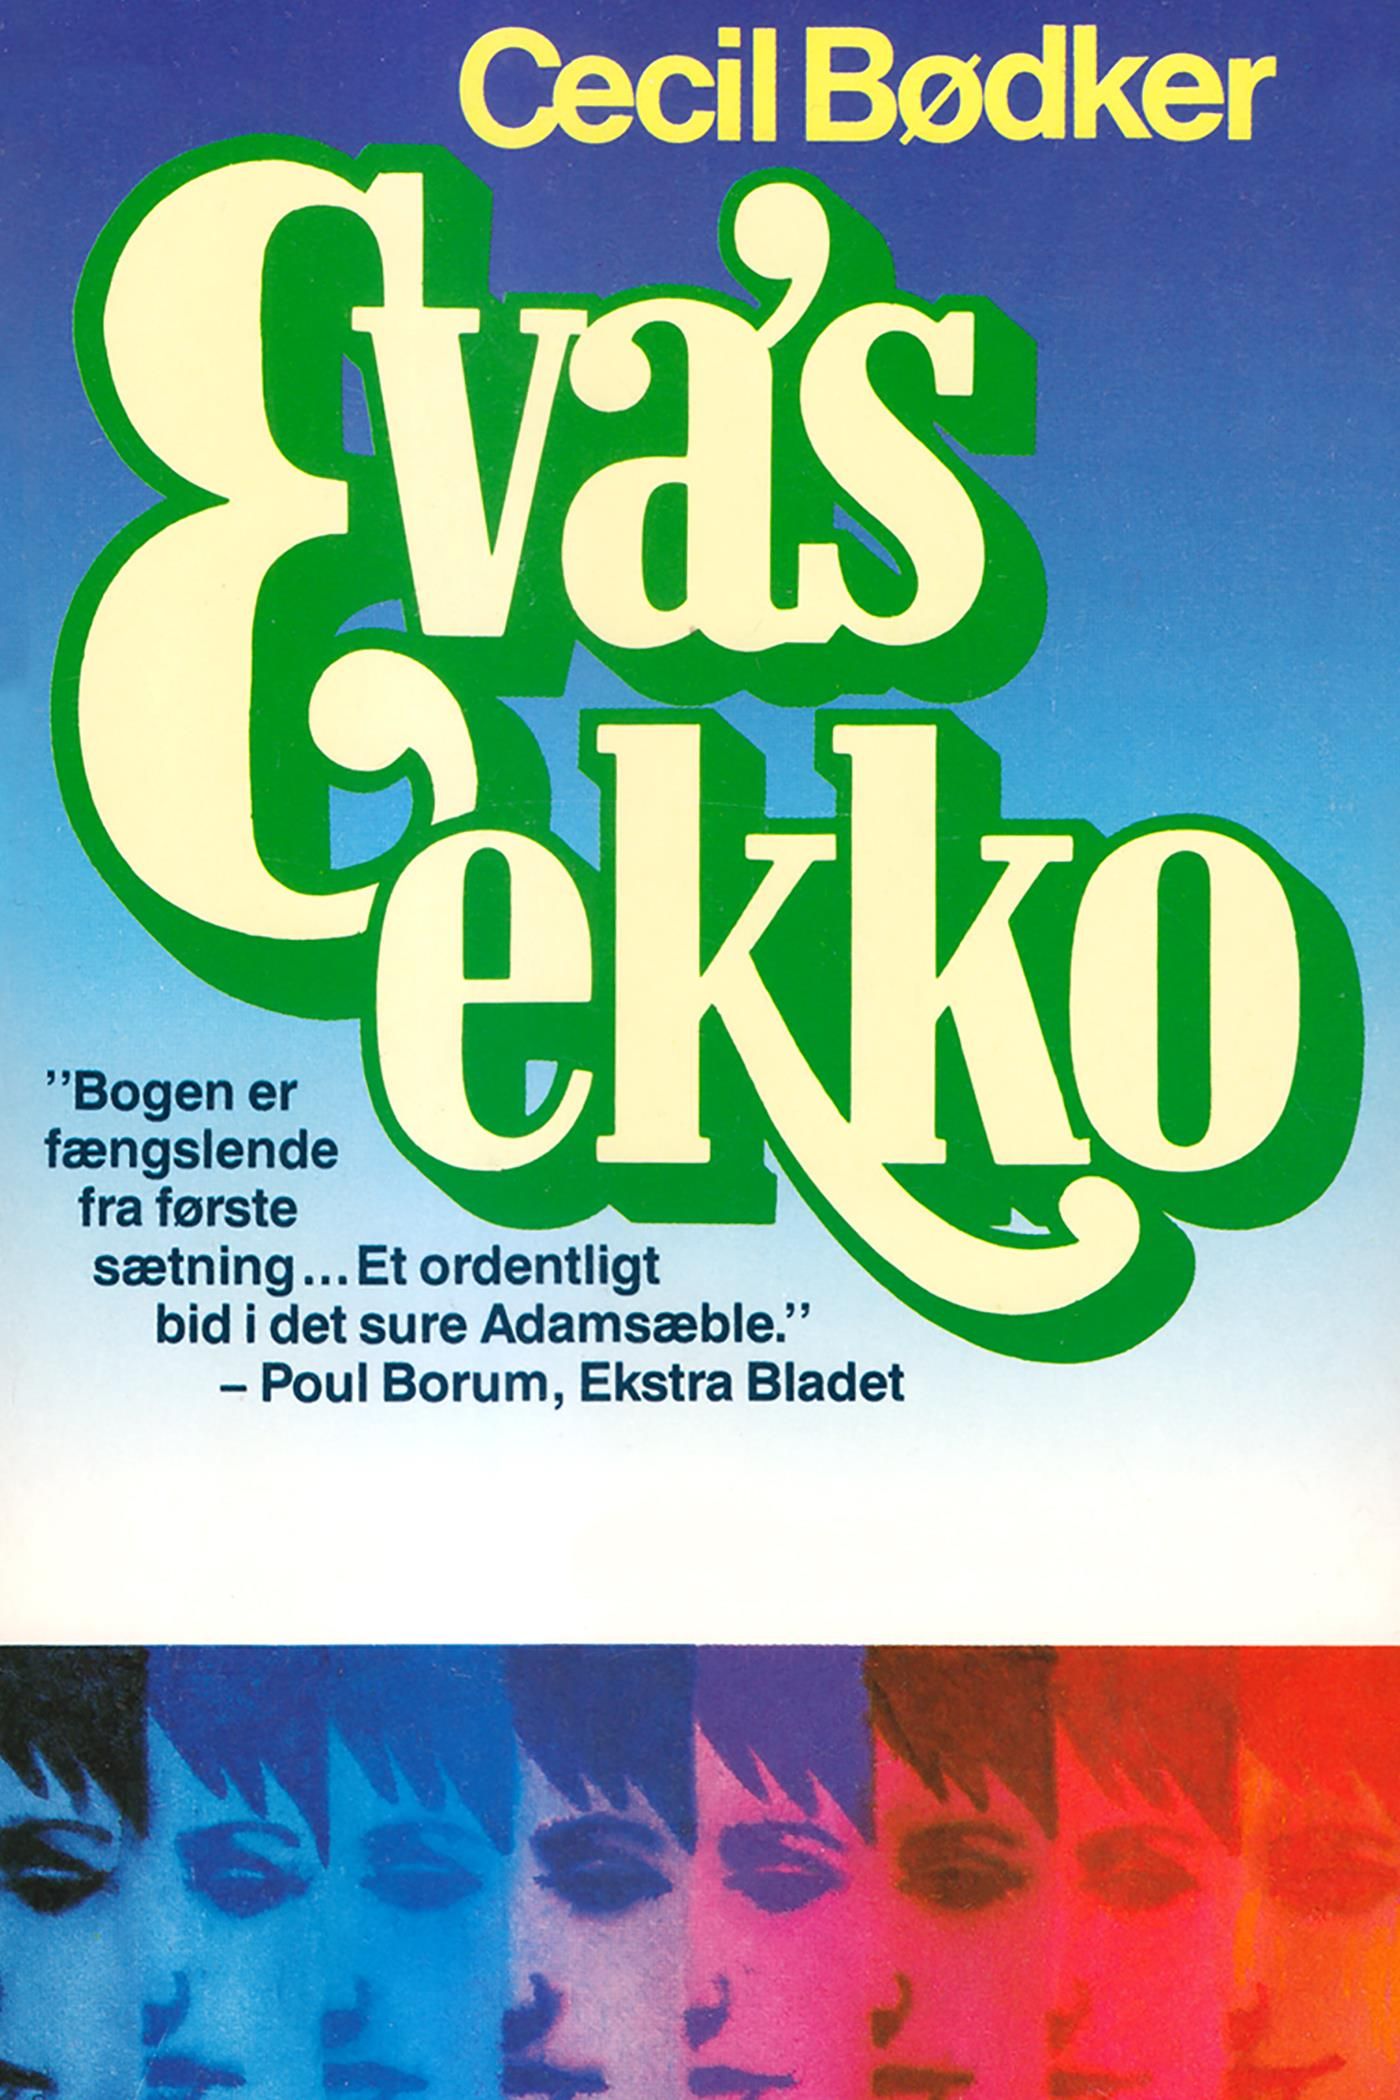 Eva's ekko, eBook by Cecil Bødker